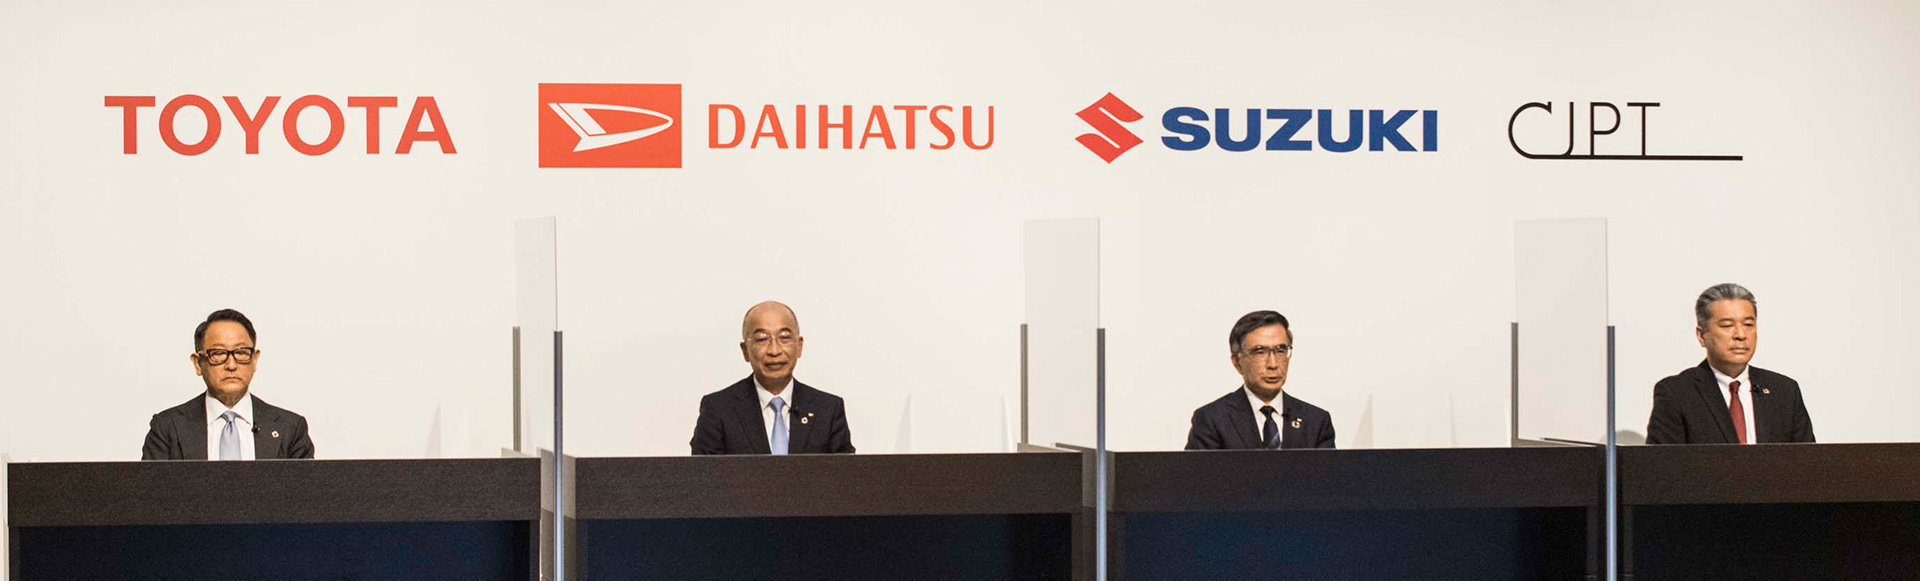 Video: Joint Press Conference by Suzuki Motor Corporation, Daihatsu Motor Co., Ltd. and Toyota Motor Corporation